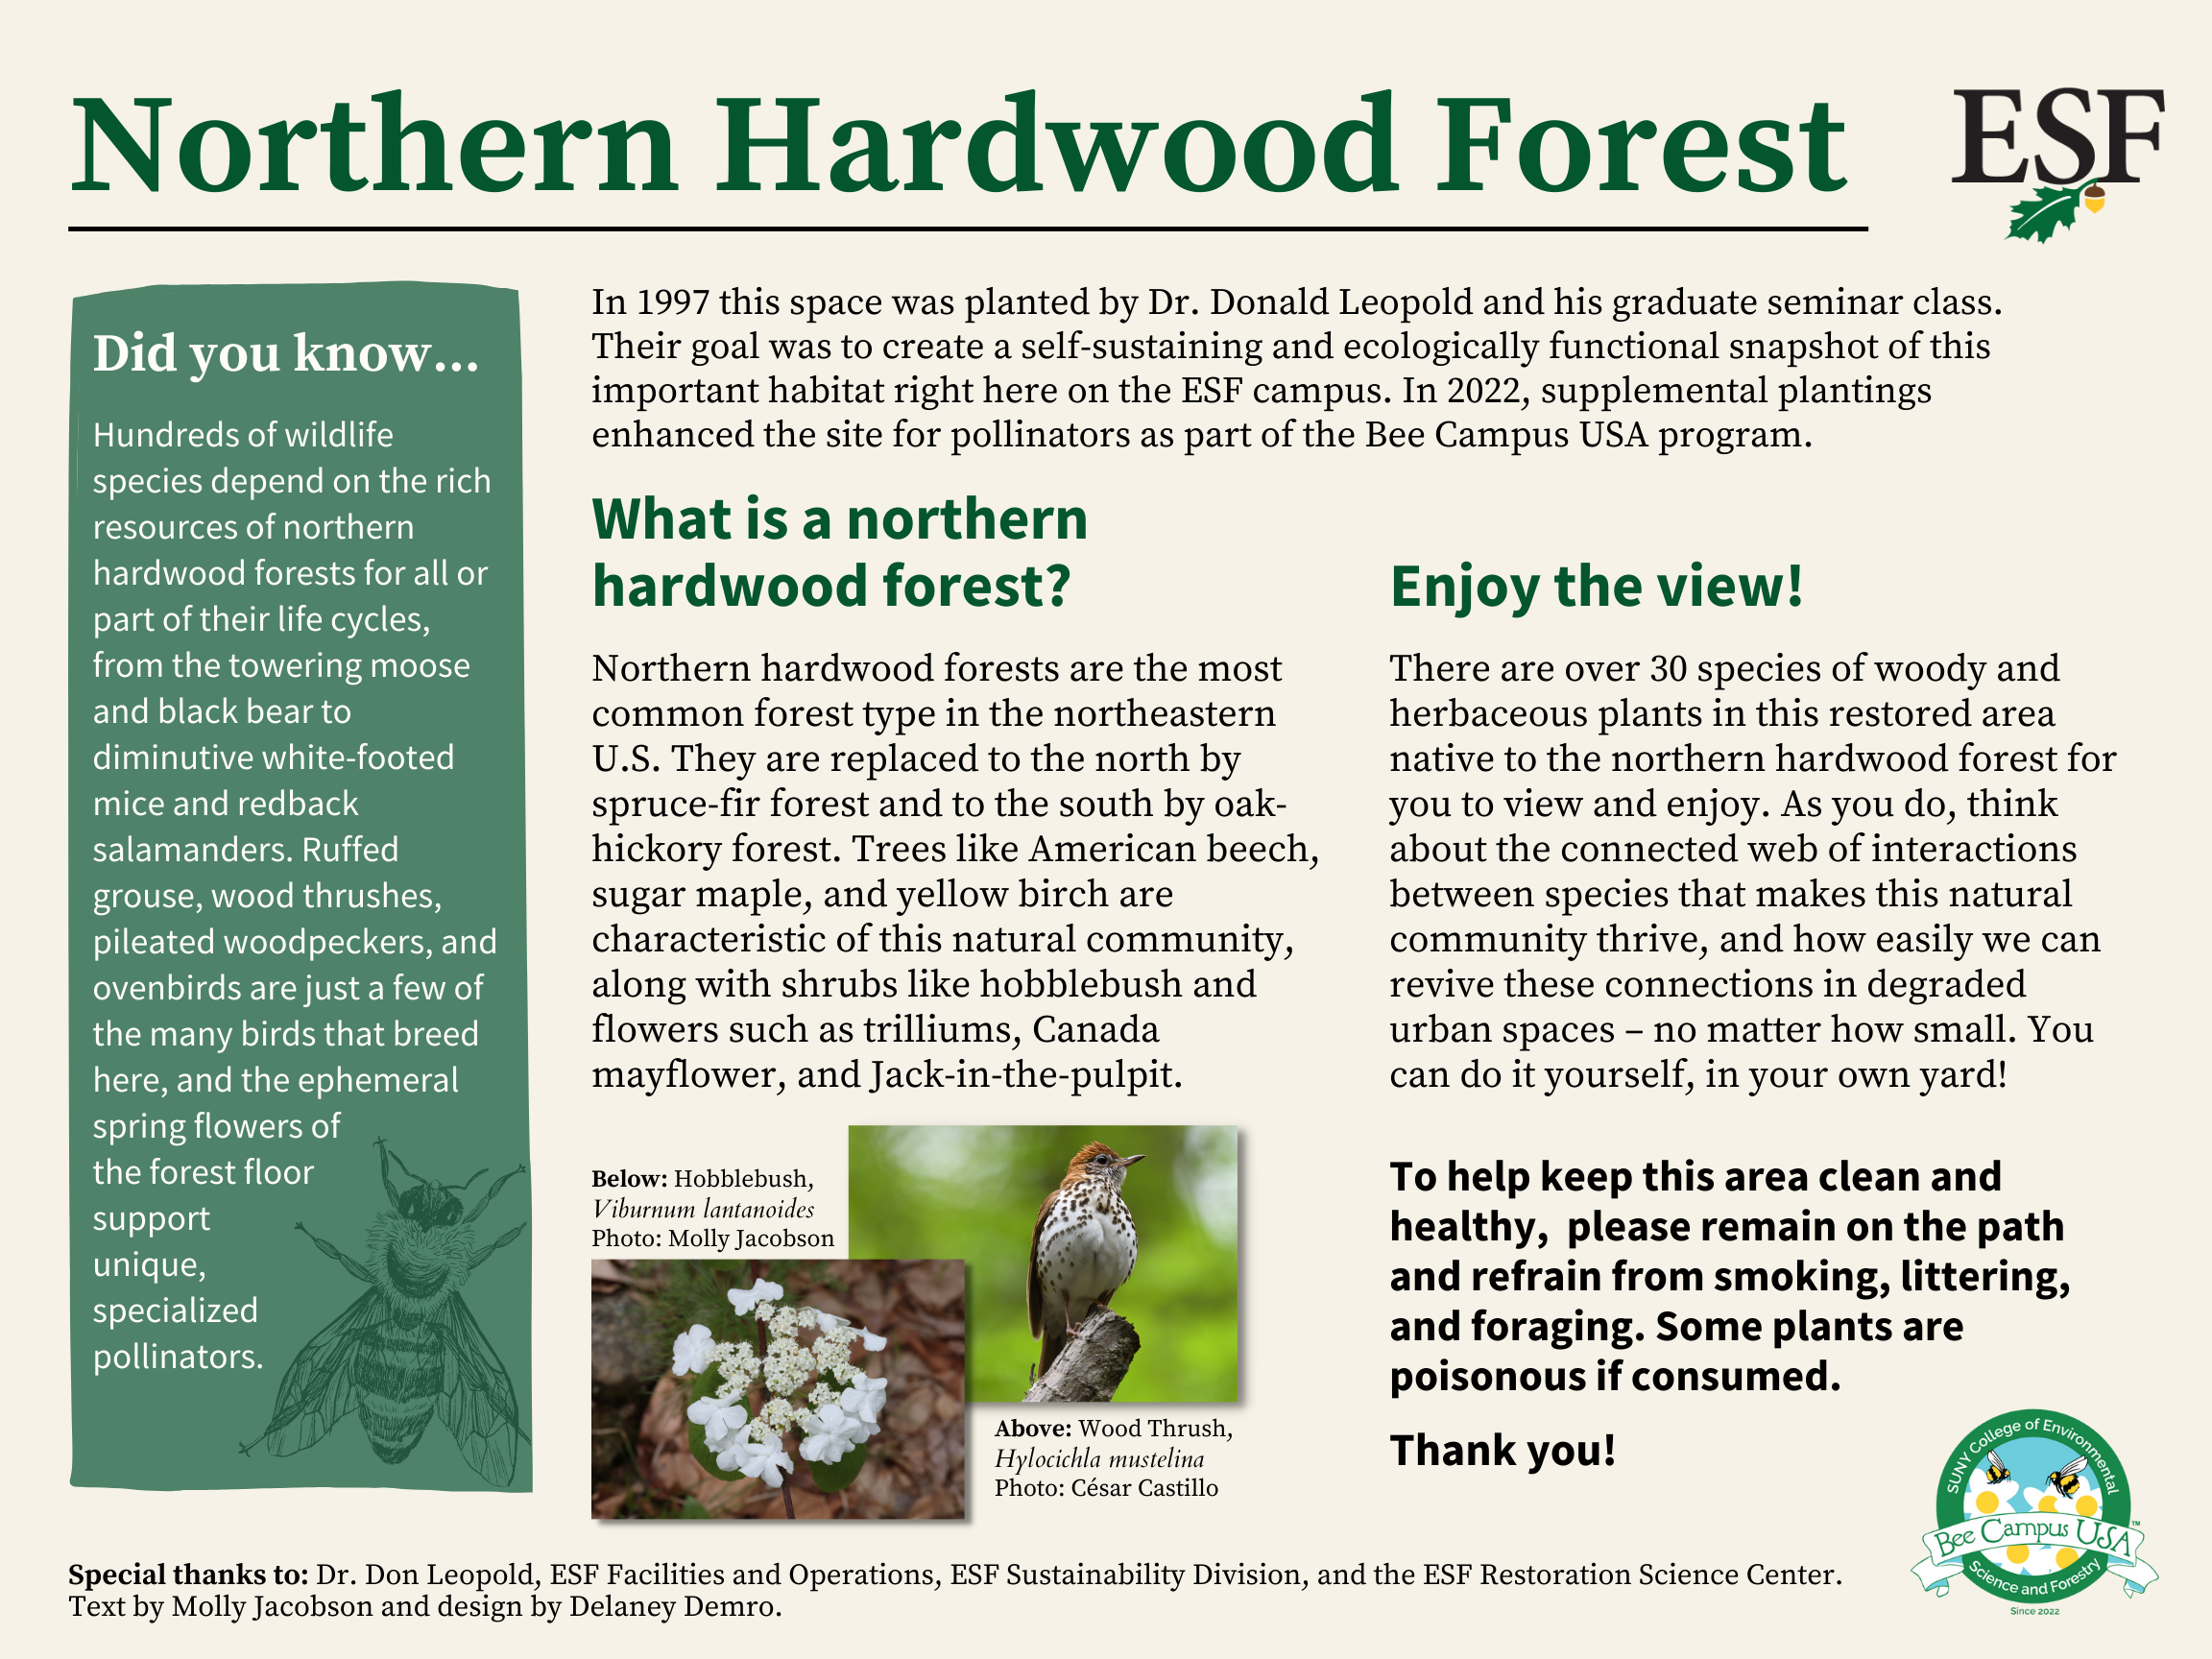 Educational signage explaining pollinator habitat found in northern hardwood forest on campus